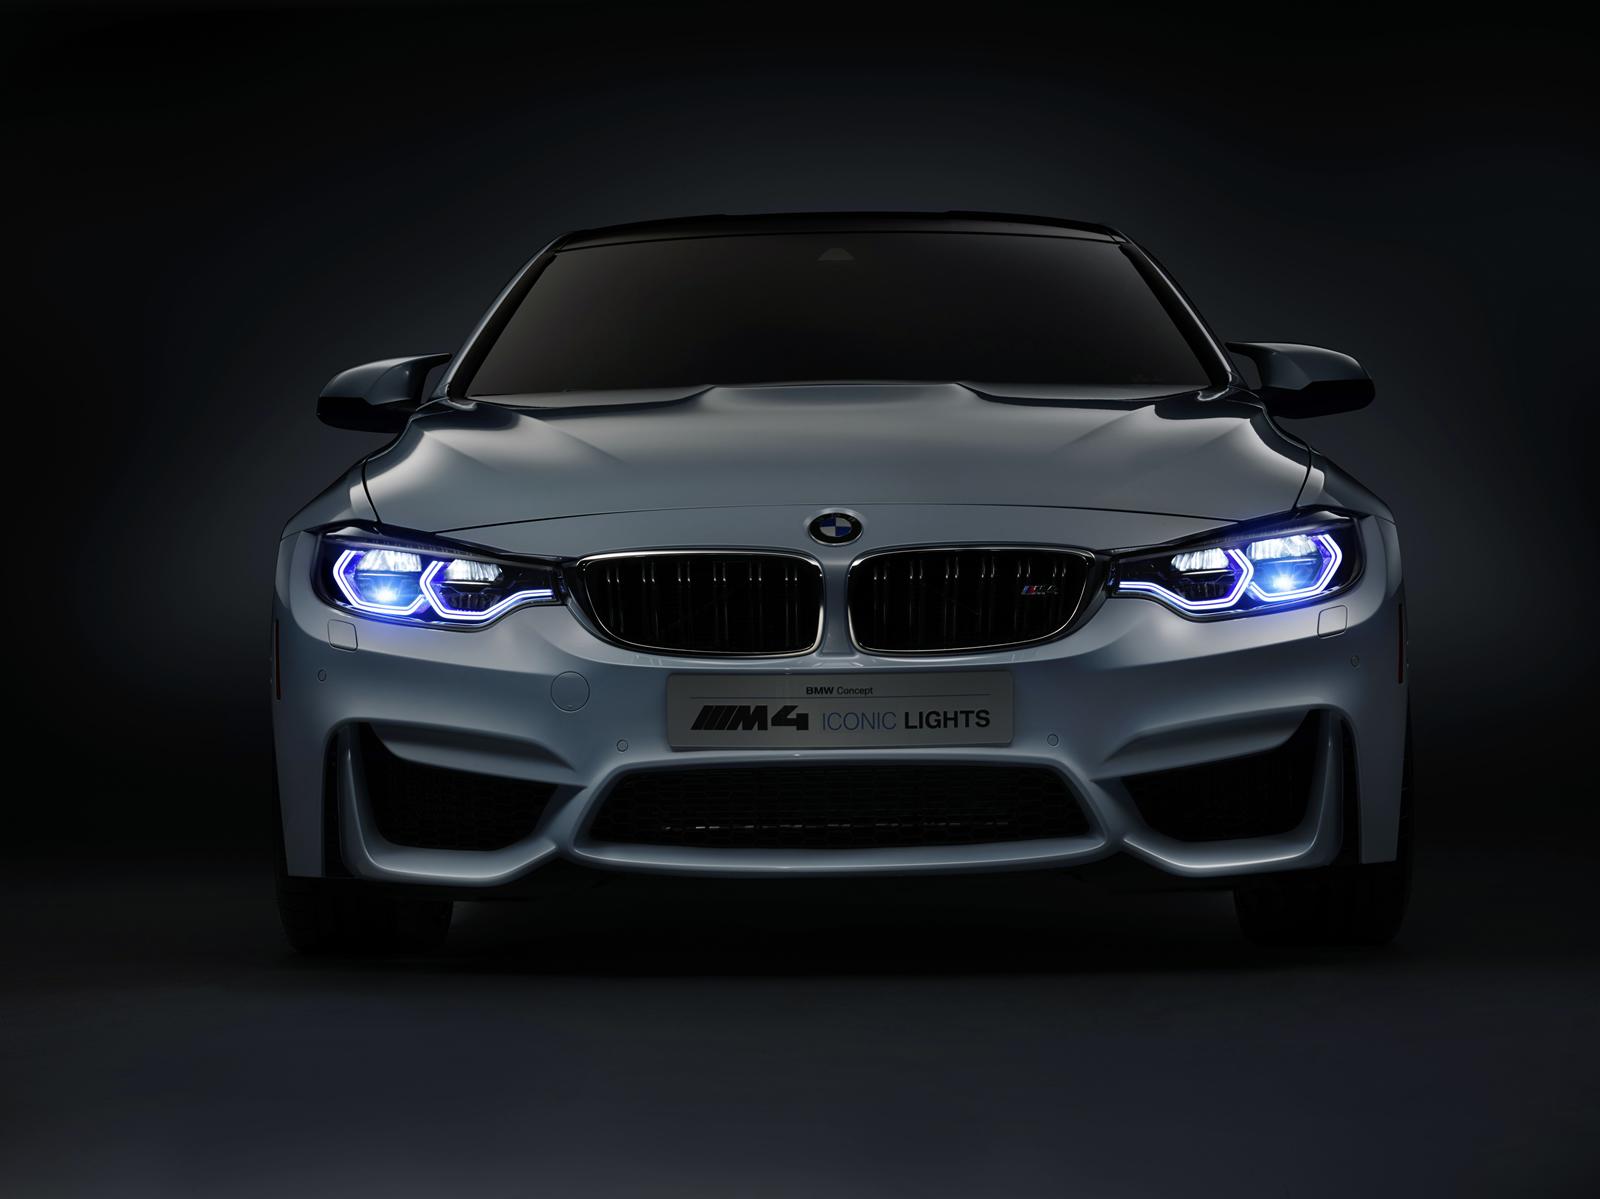 BMW M4 Concept Iconic Lights, iluminando al futuro